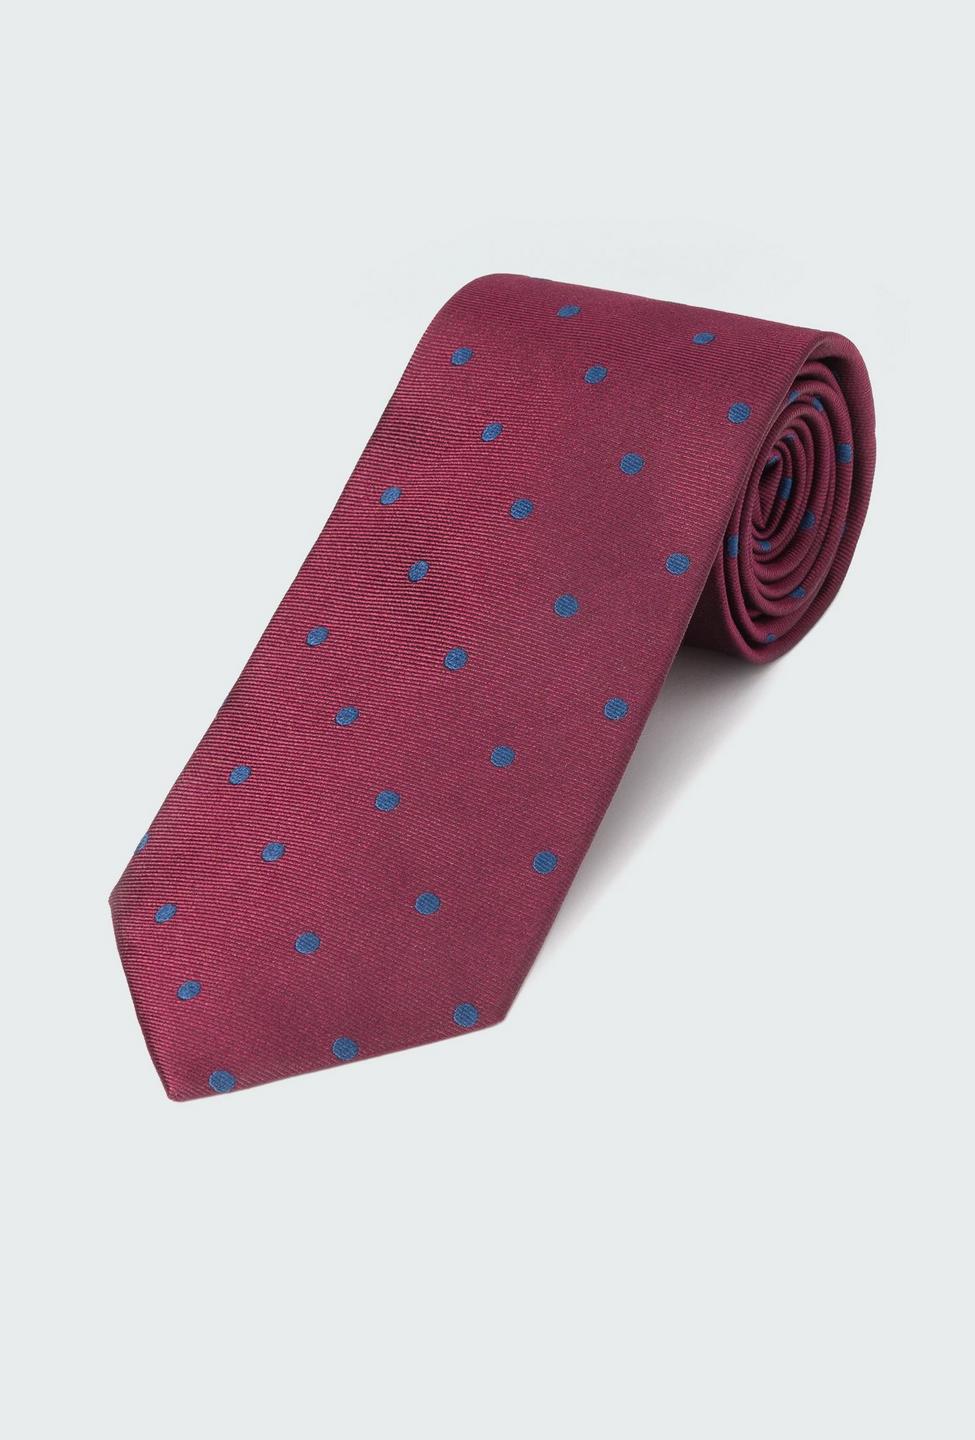 Burgundy tie - Pattern Design from Indochino Collection